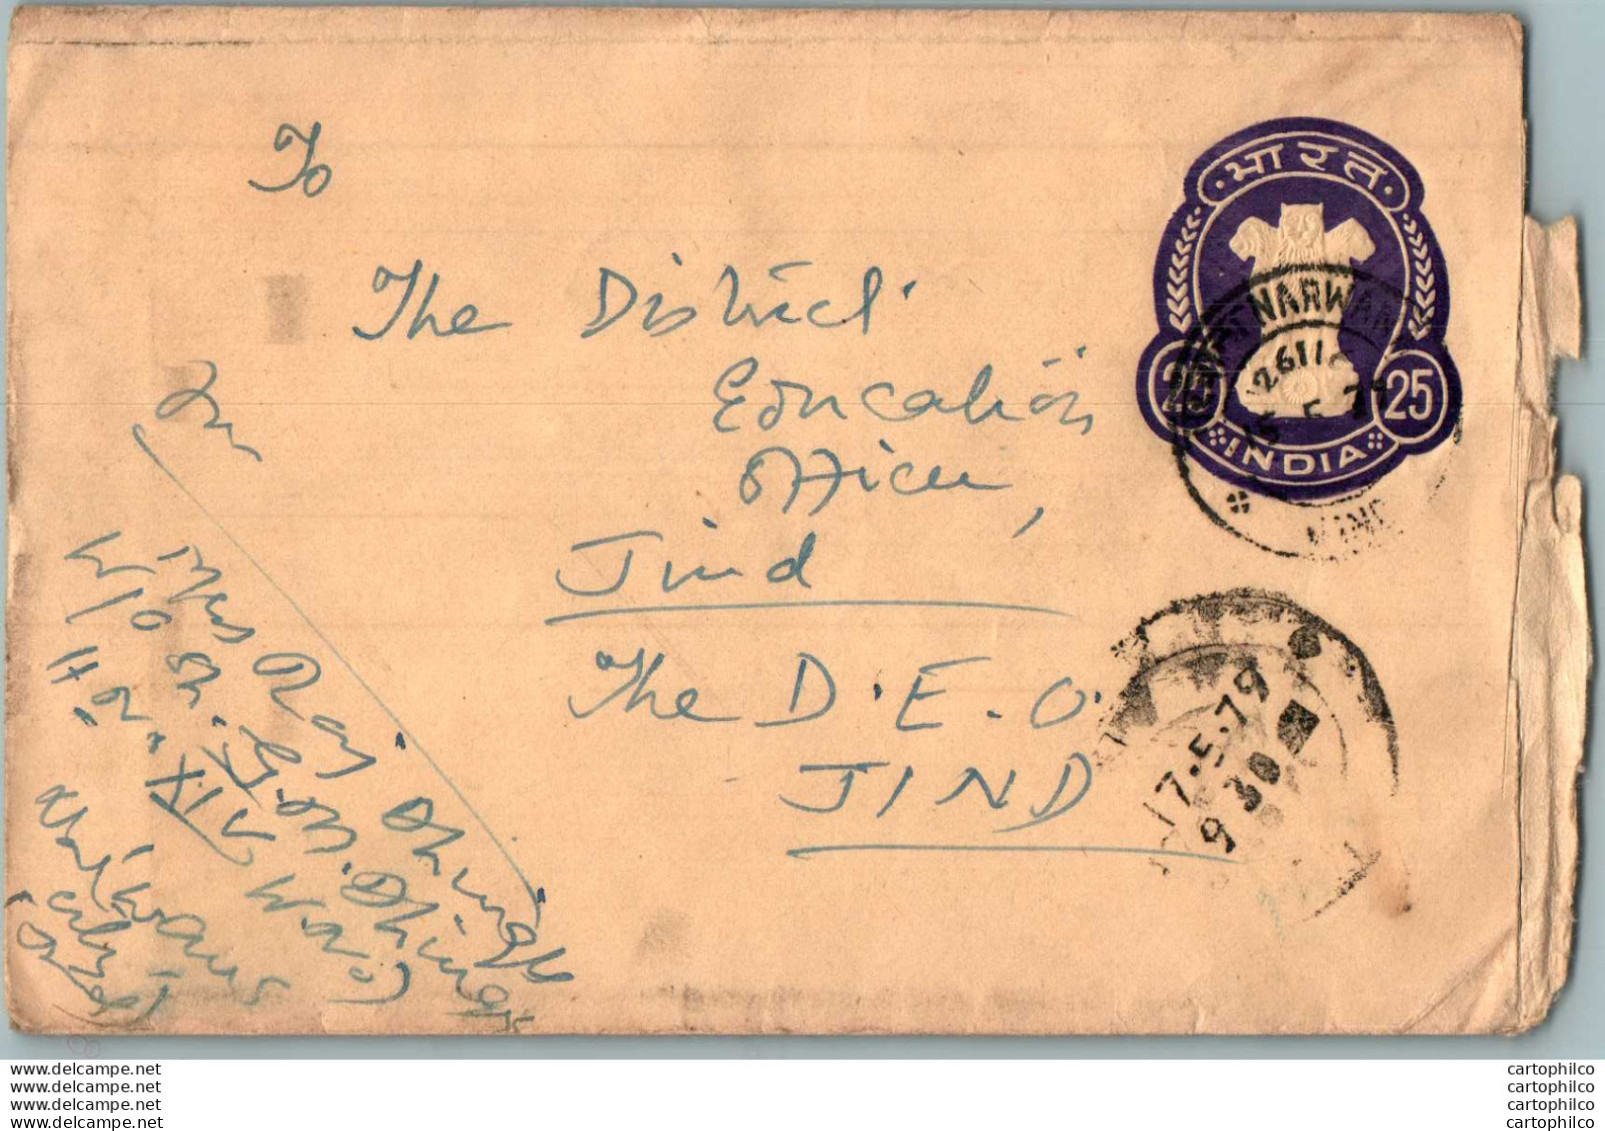 India Postal Stationery Ashoka Tiger 25 To Jind - Postkaarten